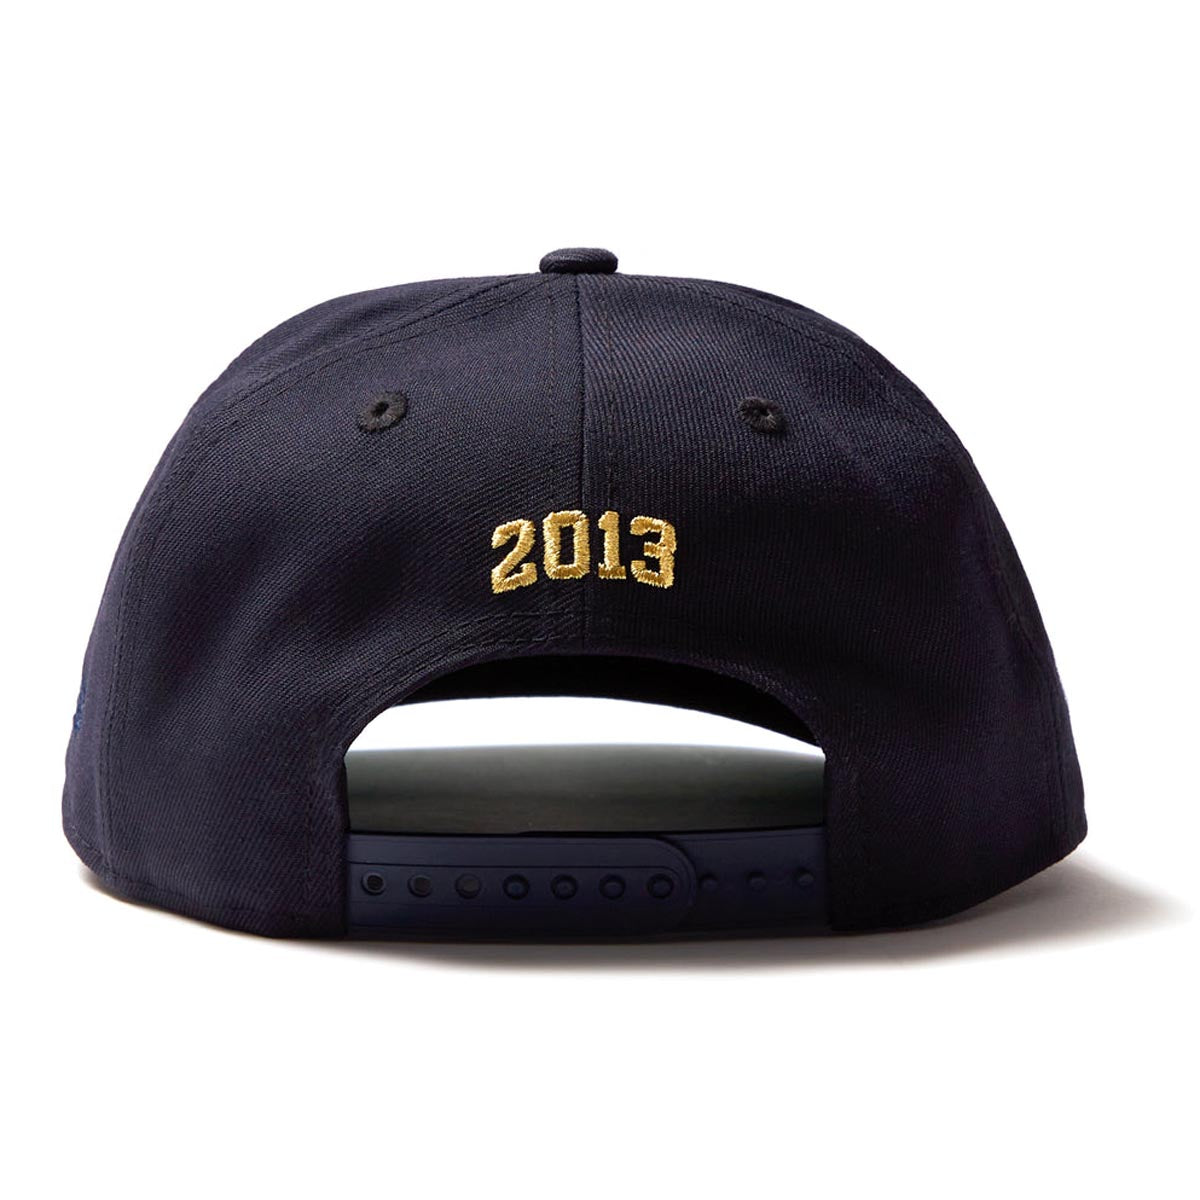 Alltimers x New Era Yankees Hat - Navy image 3